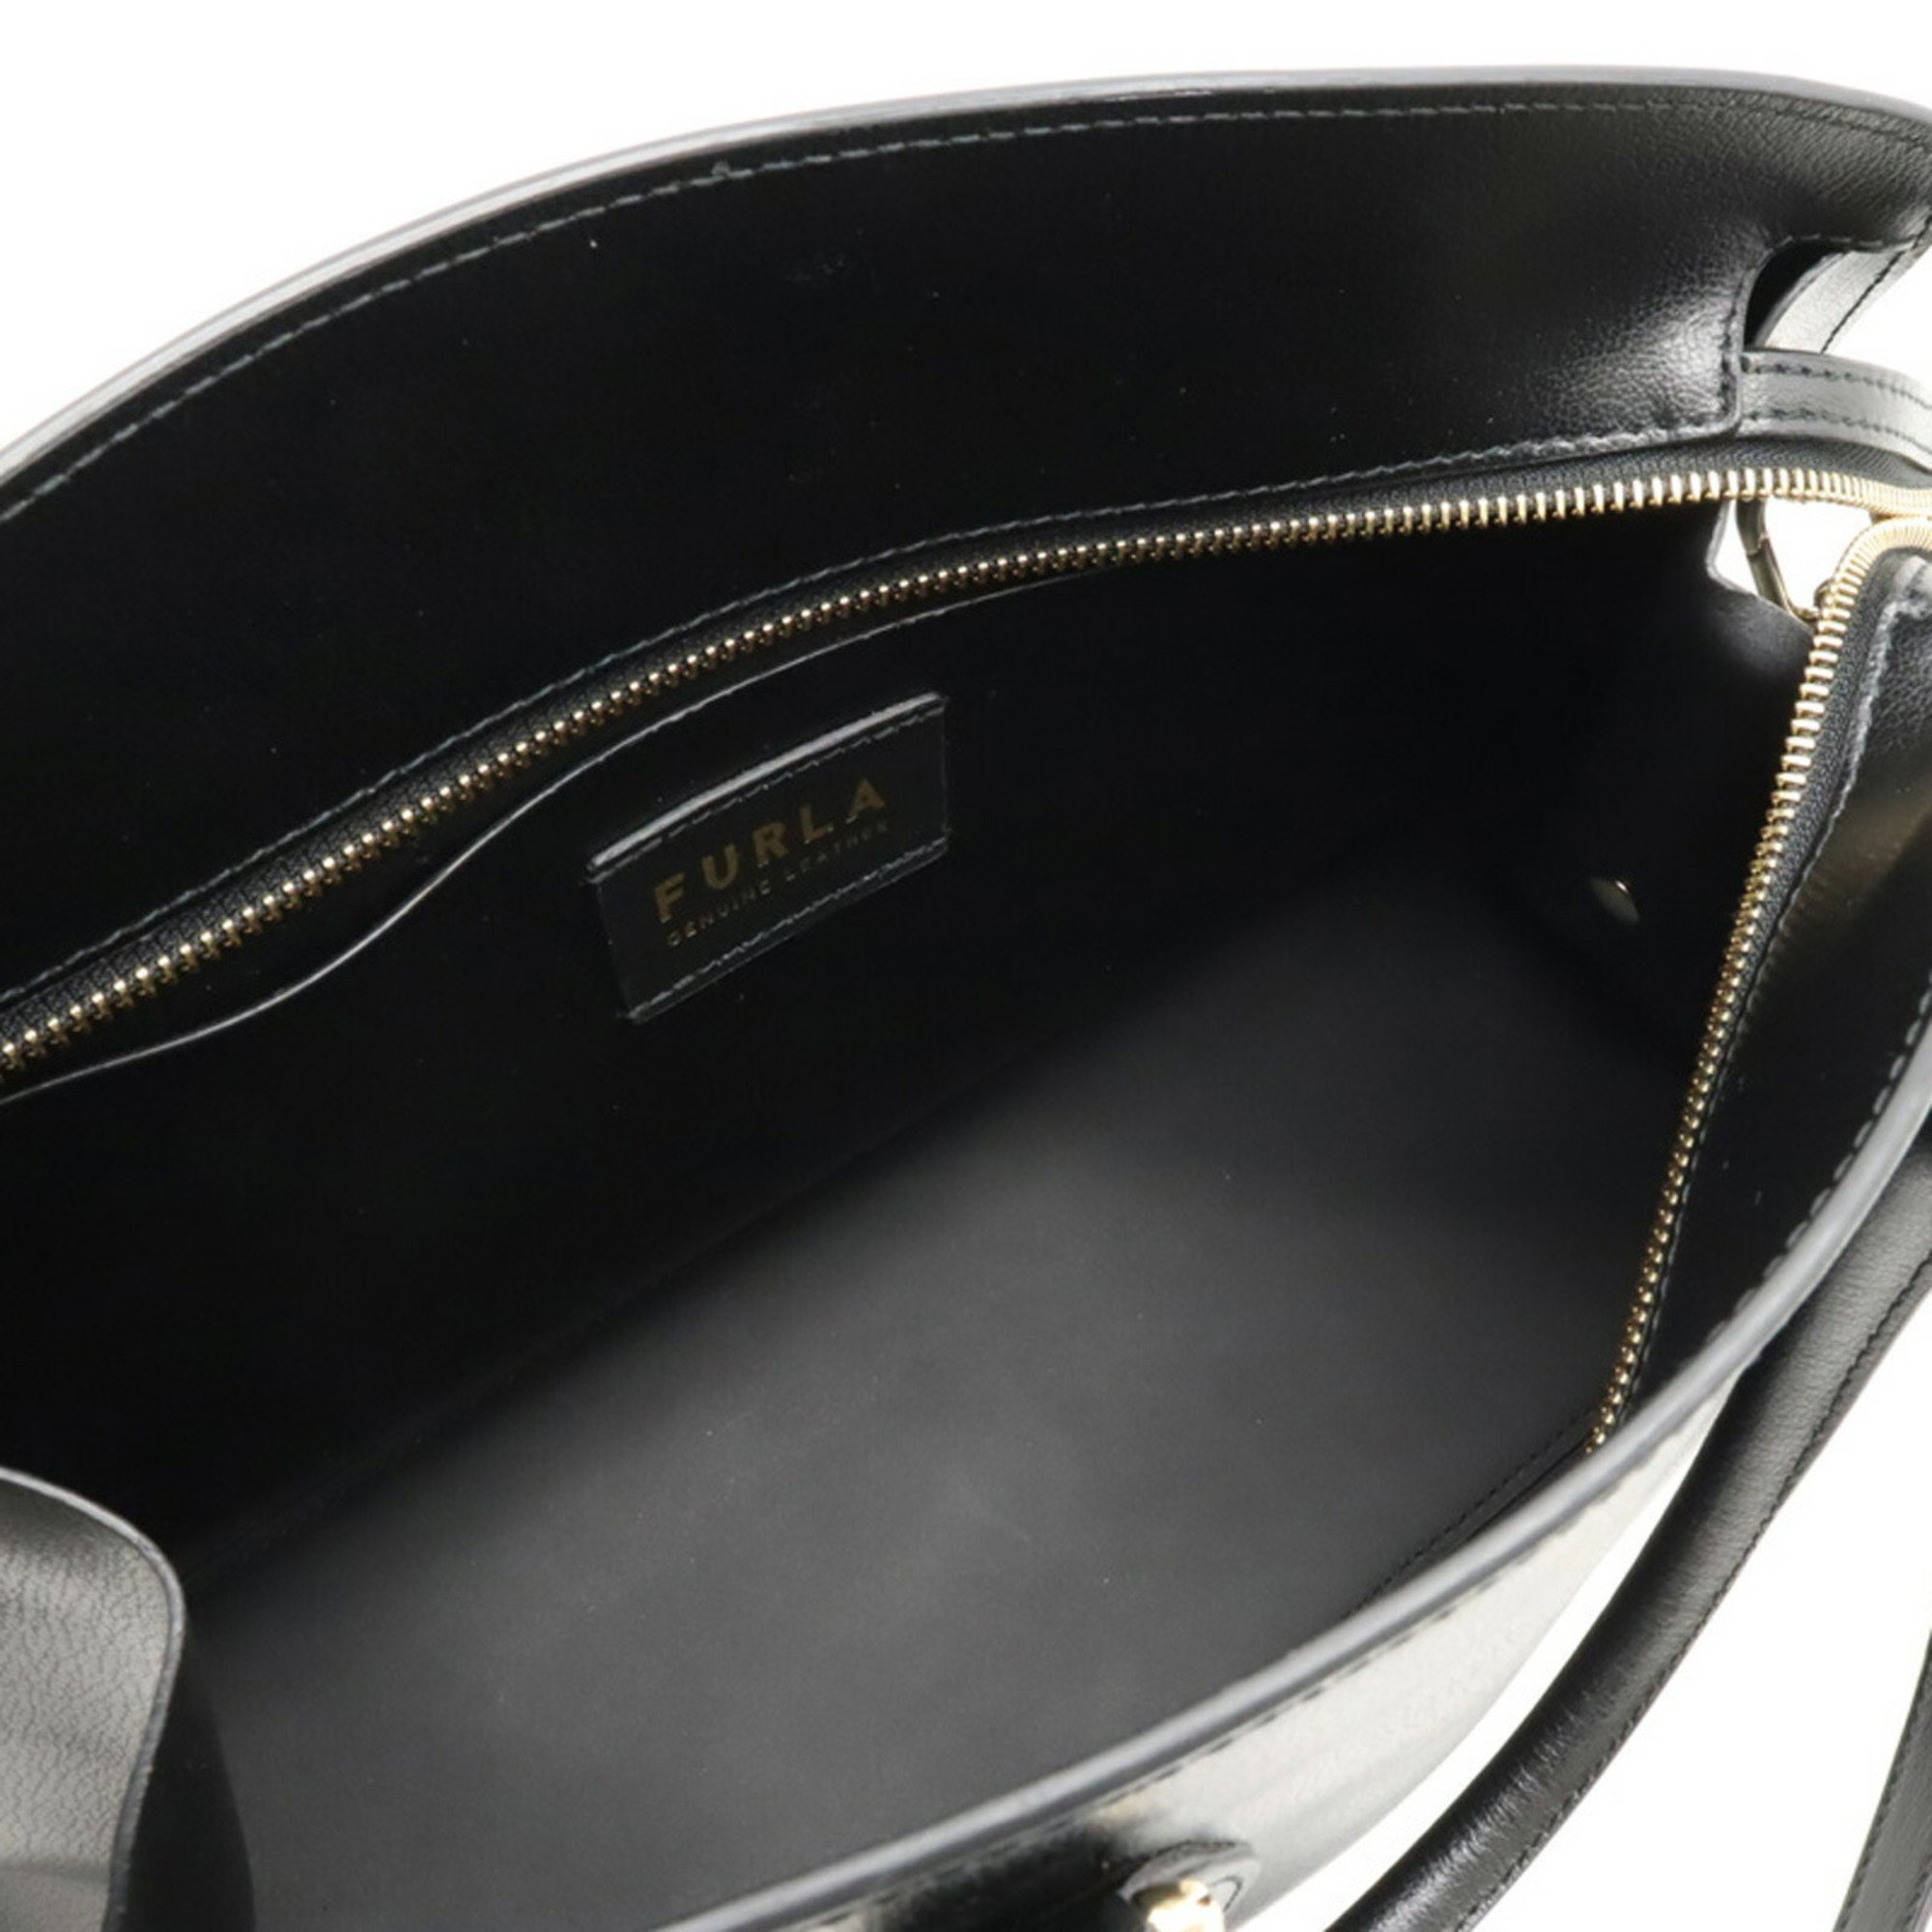 FURLA DORIS M handbag shoulder bag leather black